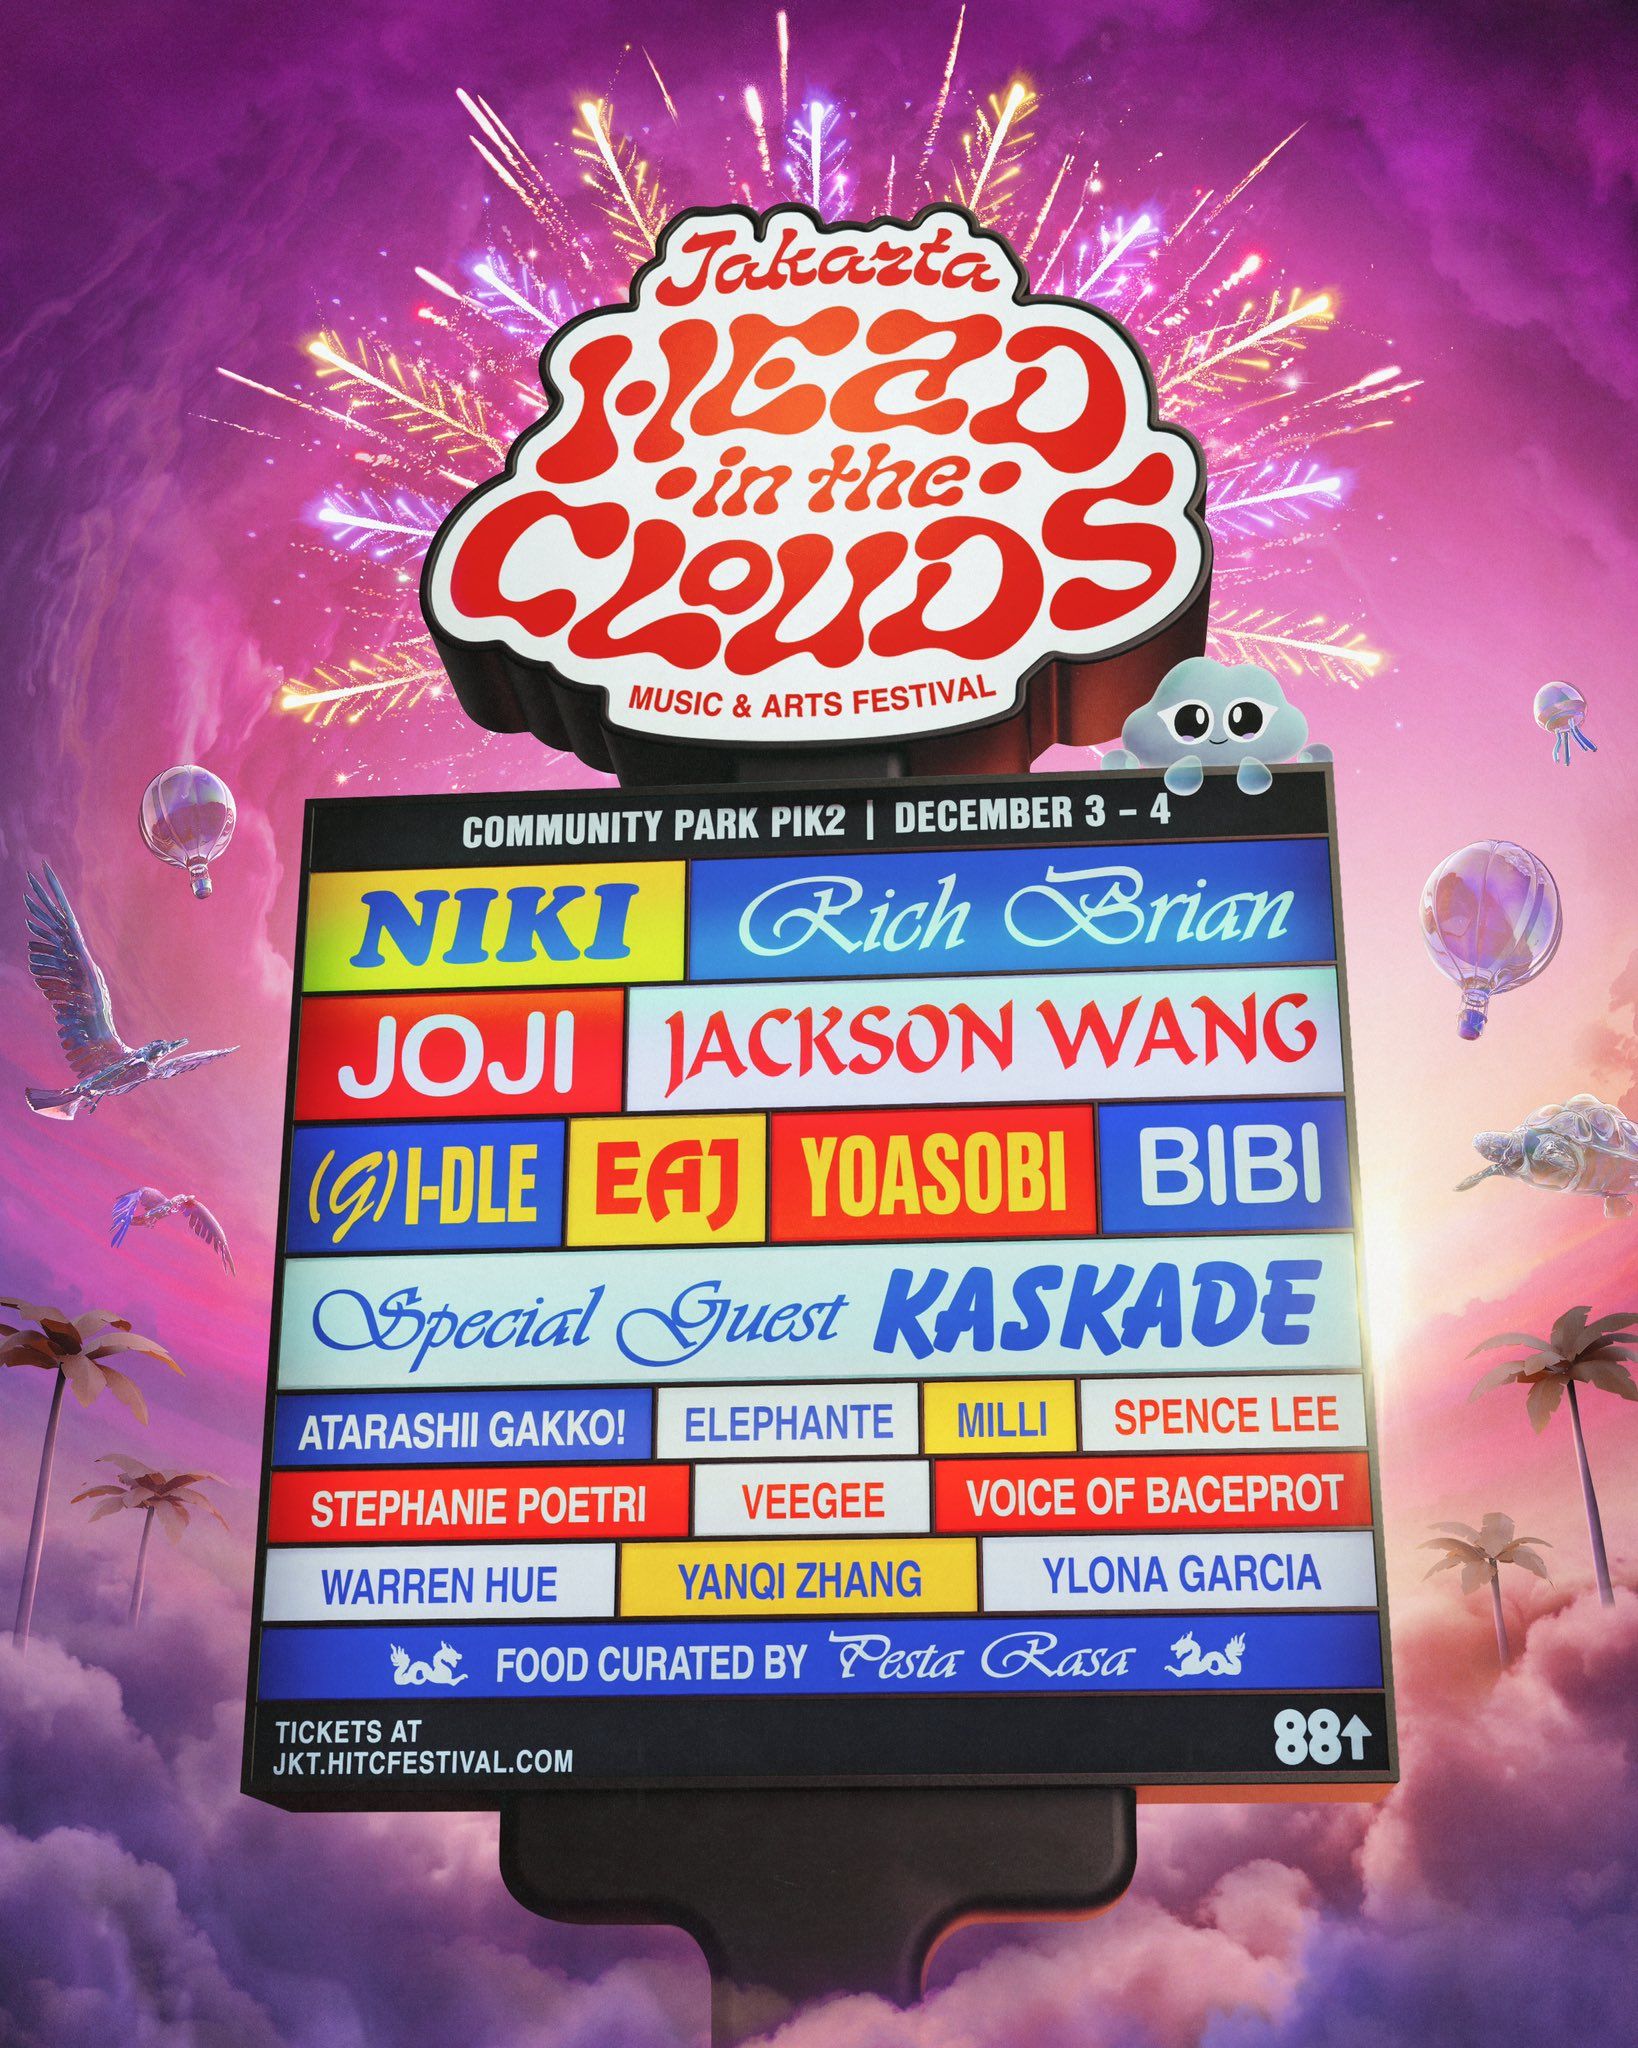 Link Beli Tiket Konser Jakarta Head In The Clouds! Buruan Sebelum